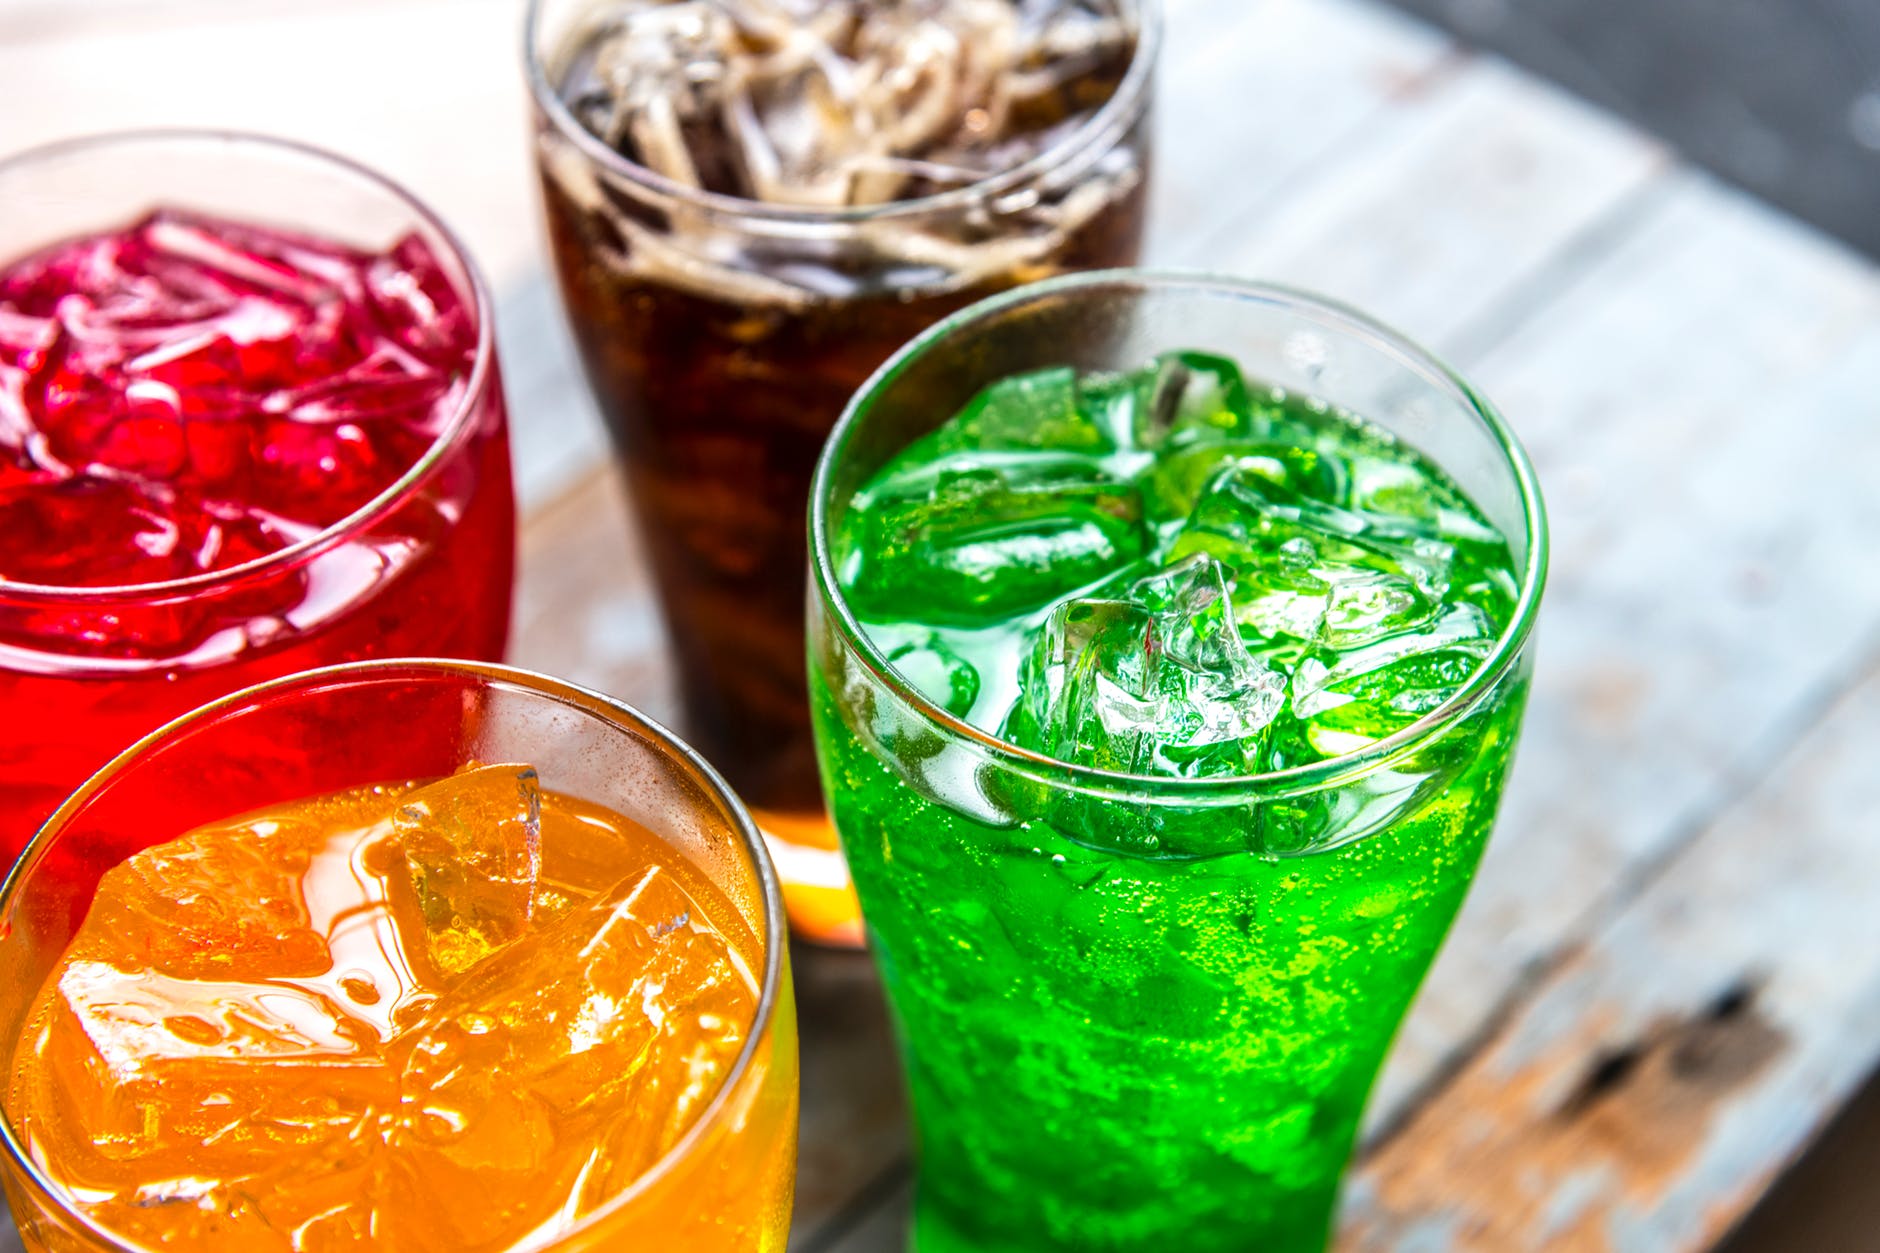 Report: soft drink market